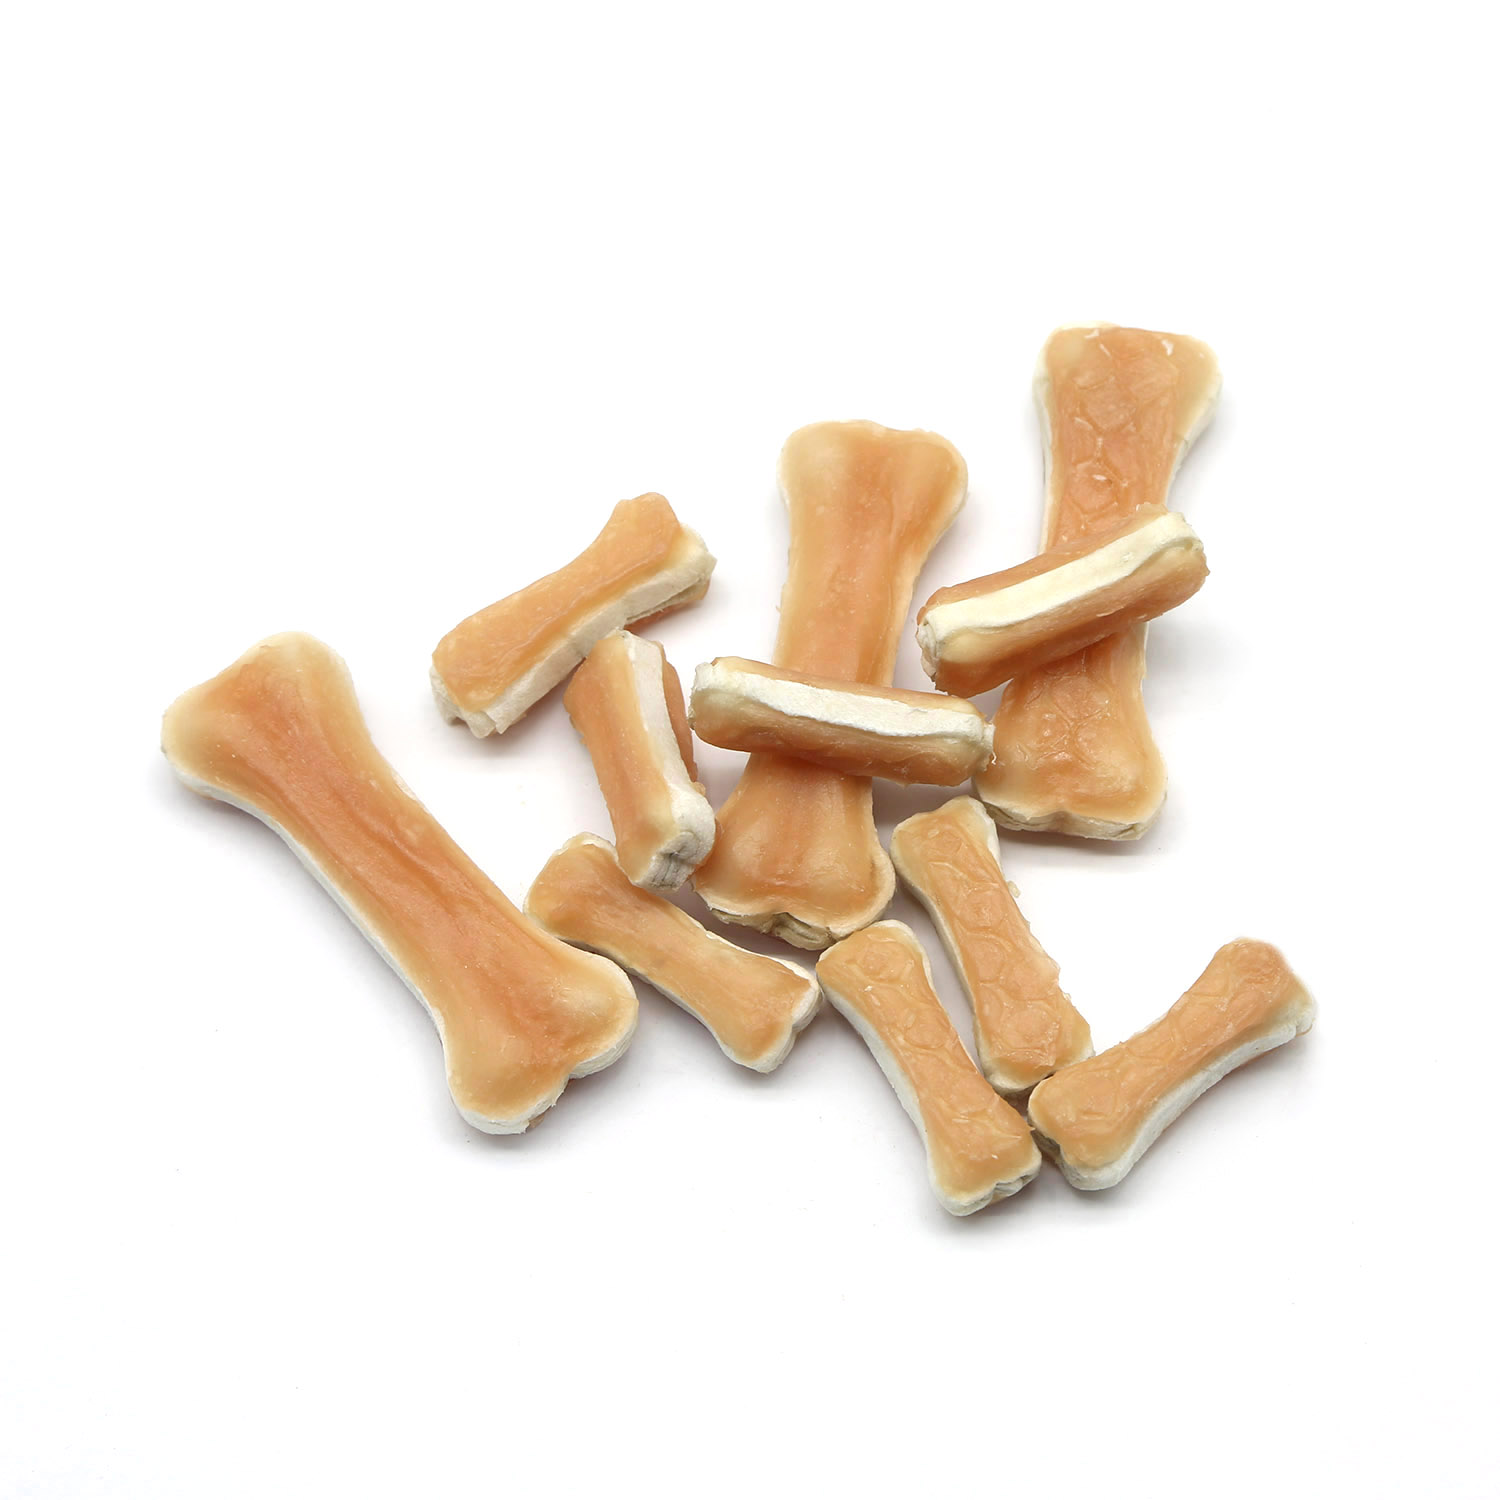 OEM/ODM Dog rawhide chews rawhide bones with chicken long lasting chews